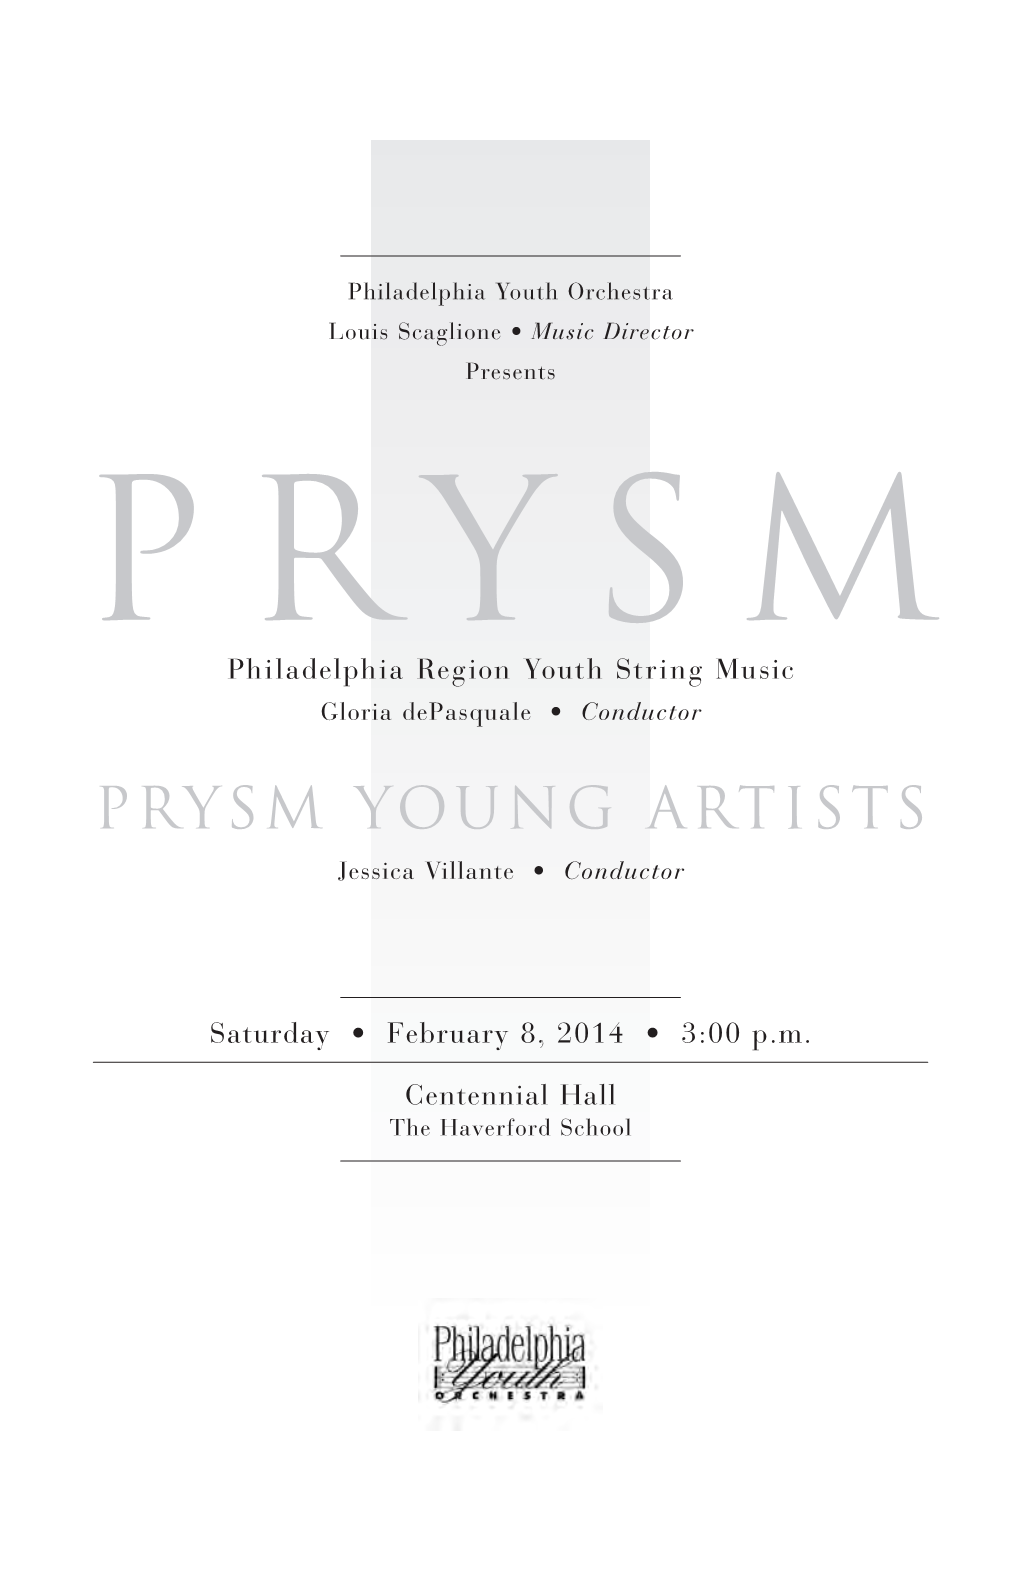 Prysm Young Artists Jessica Villante • Conductor